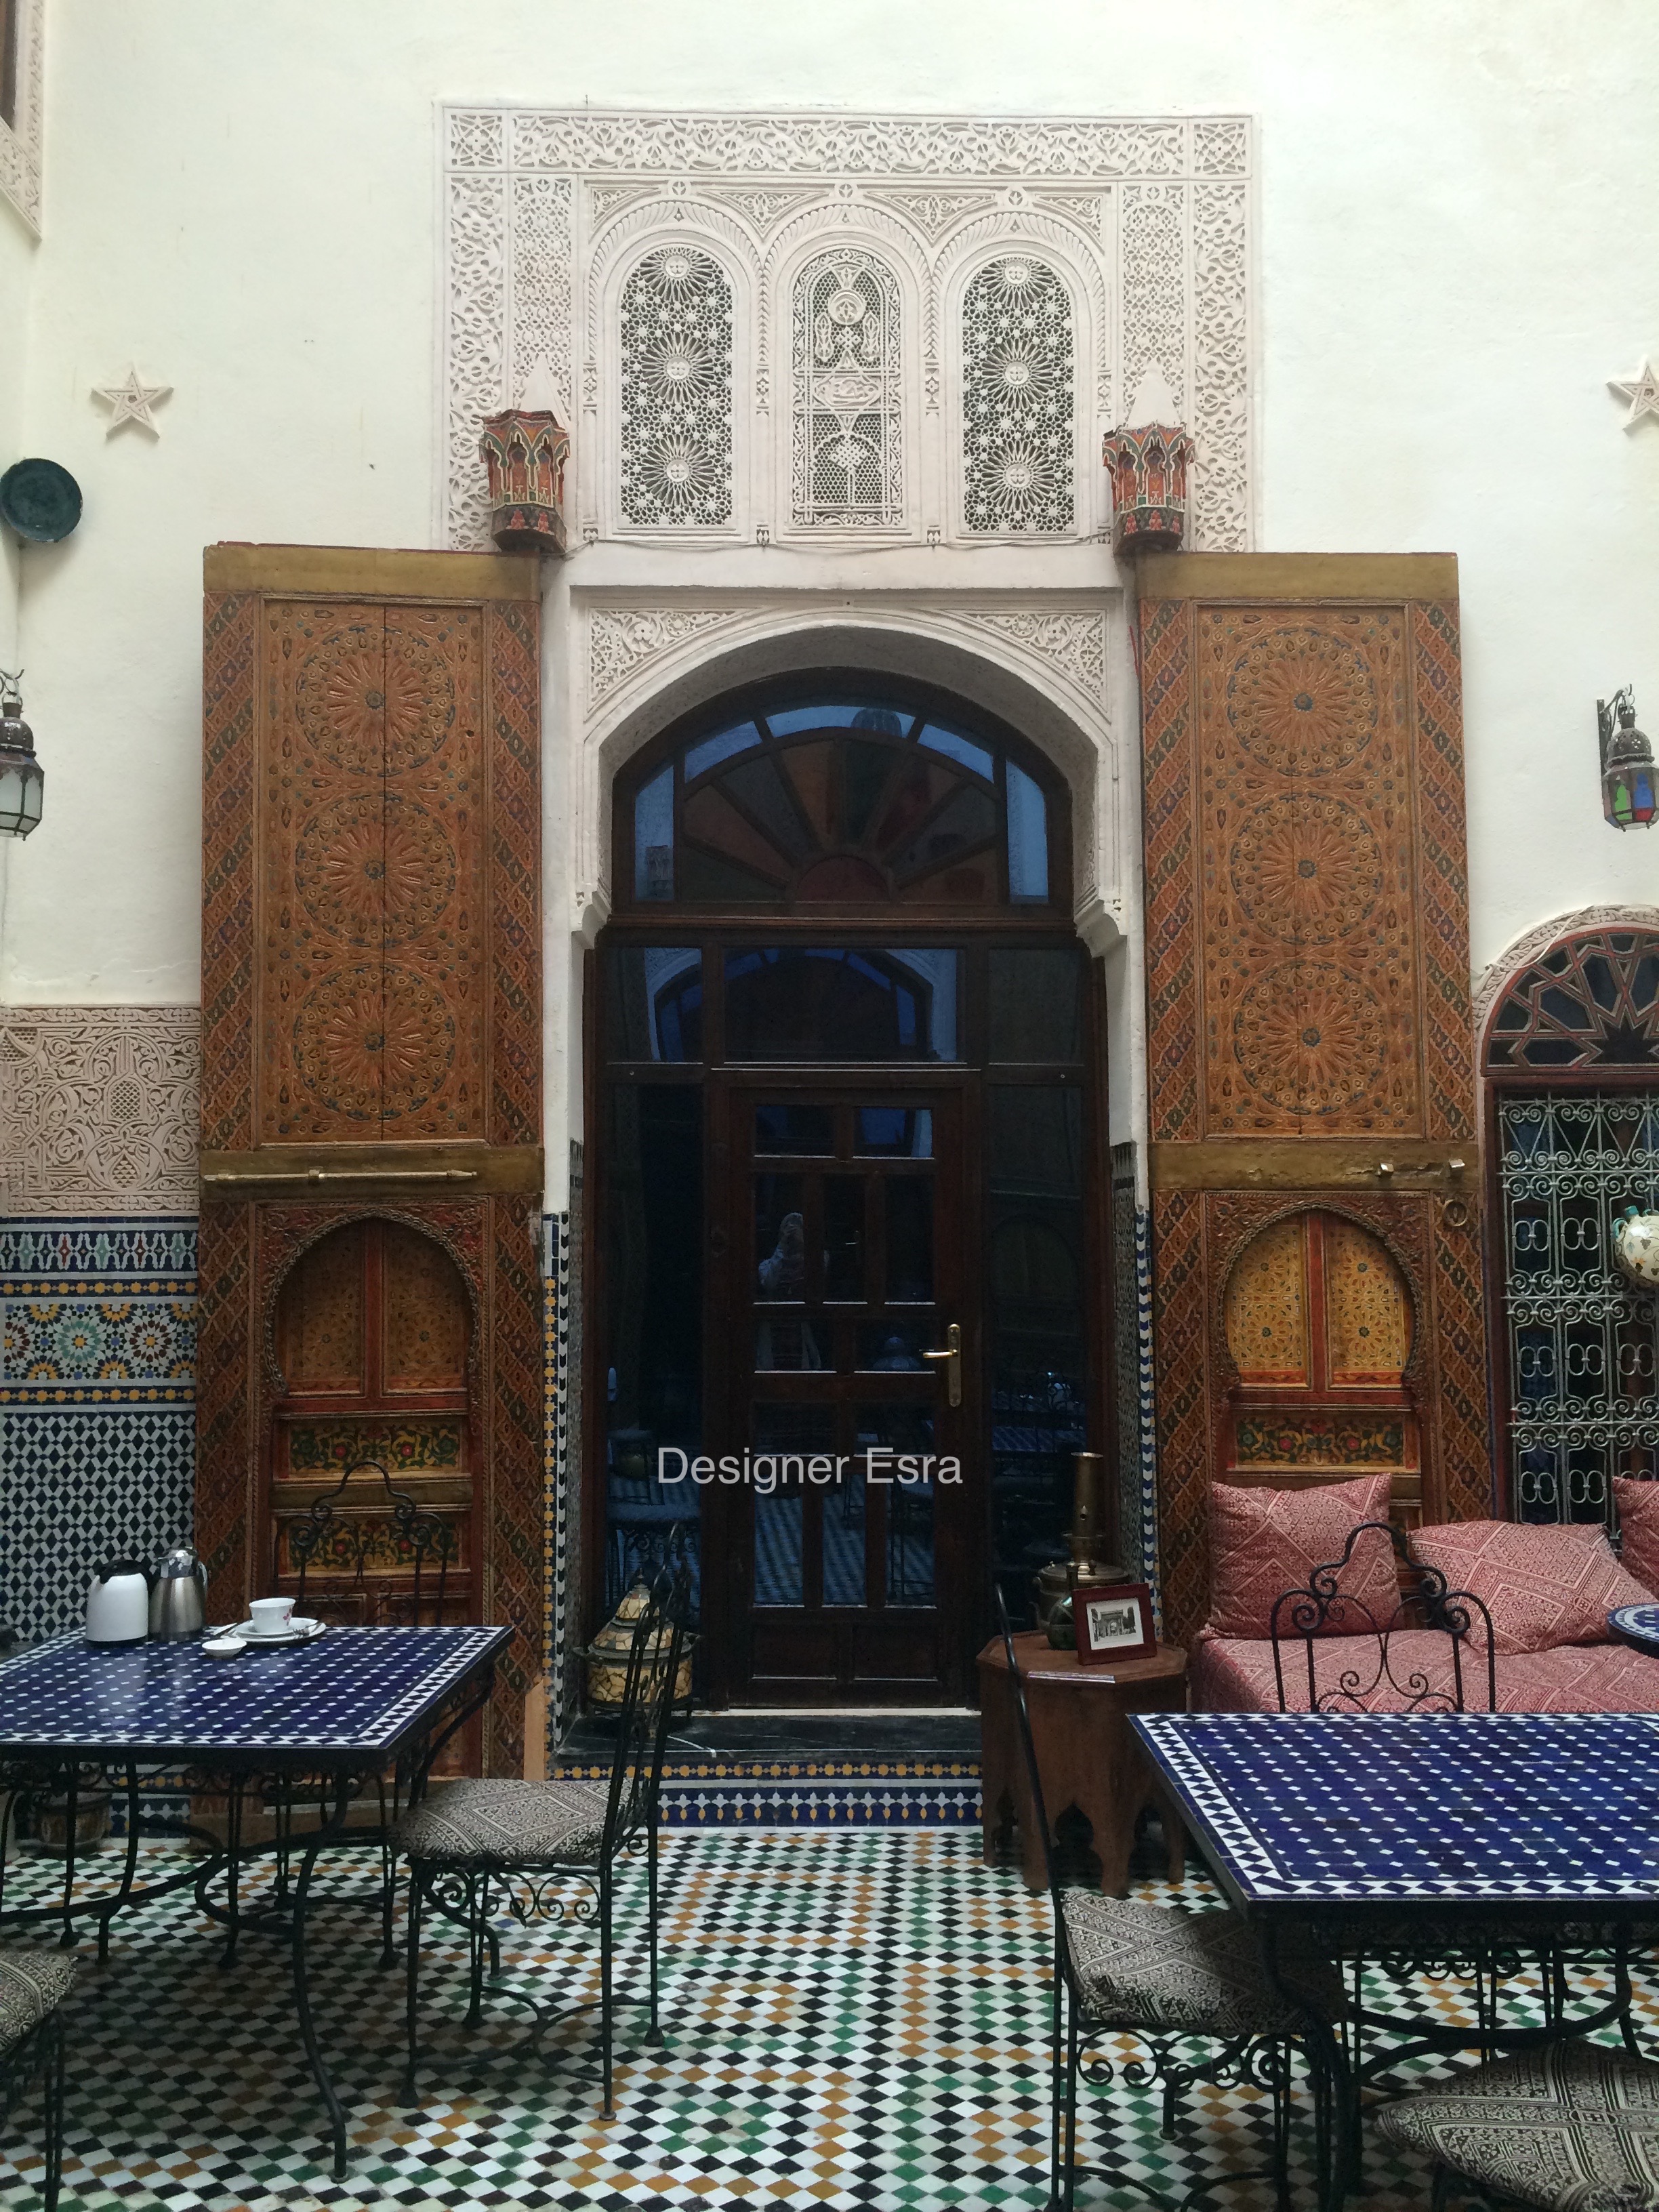 Moroccan Courtyard